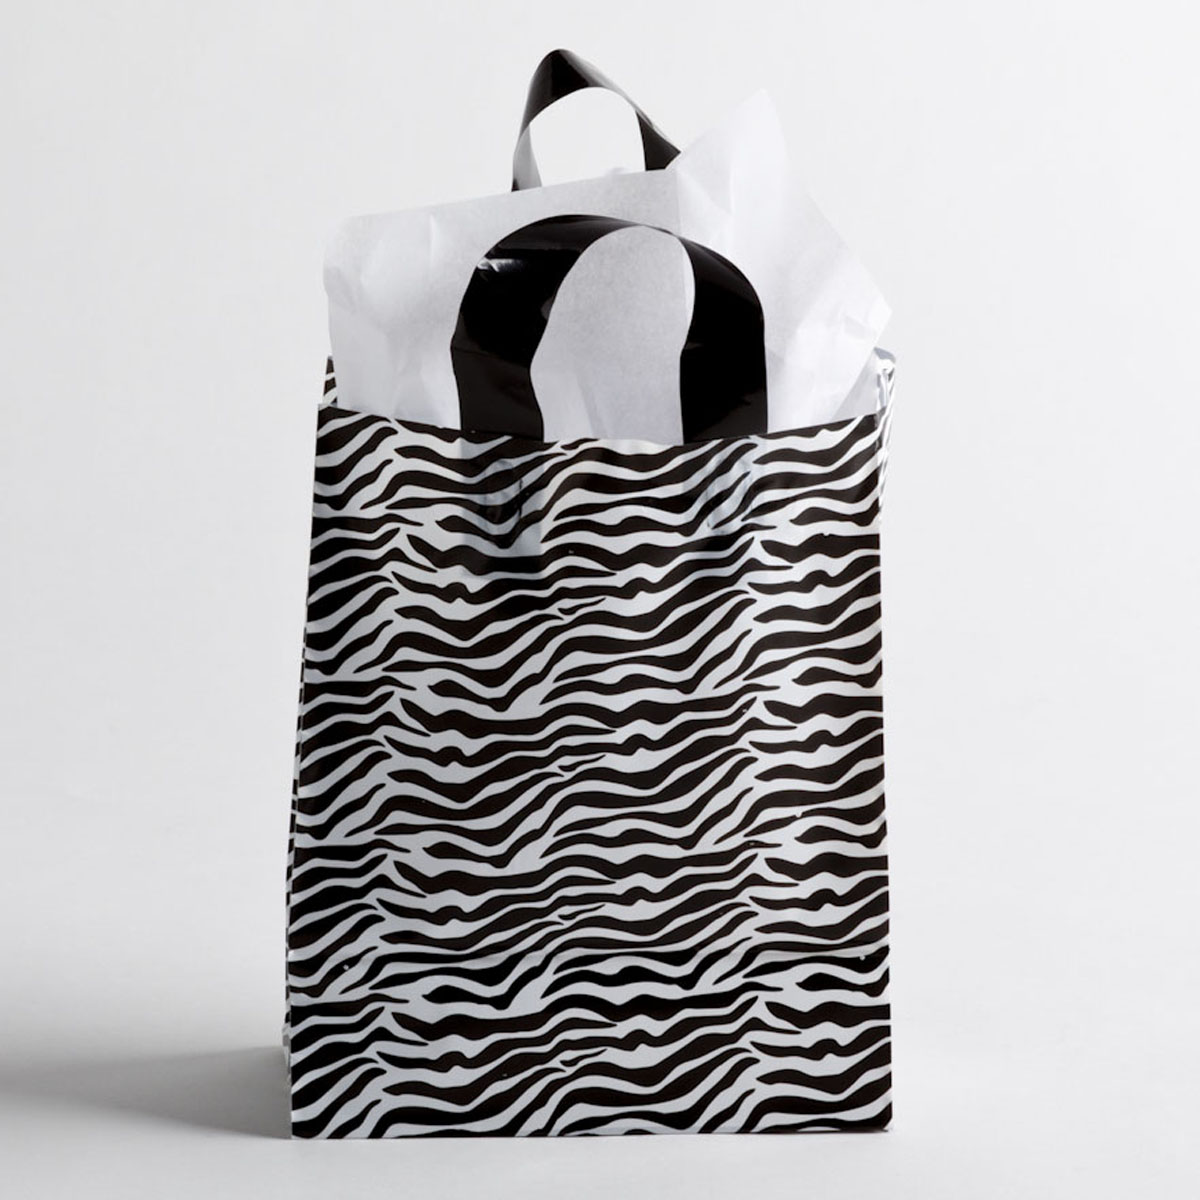 BLACK PLASTIC BAGS SMALL & LARGE BOUTIQUE RETAIL GIFT SHOP CARRIER BAG 